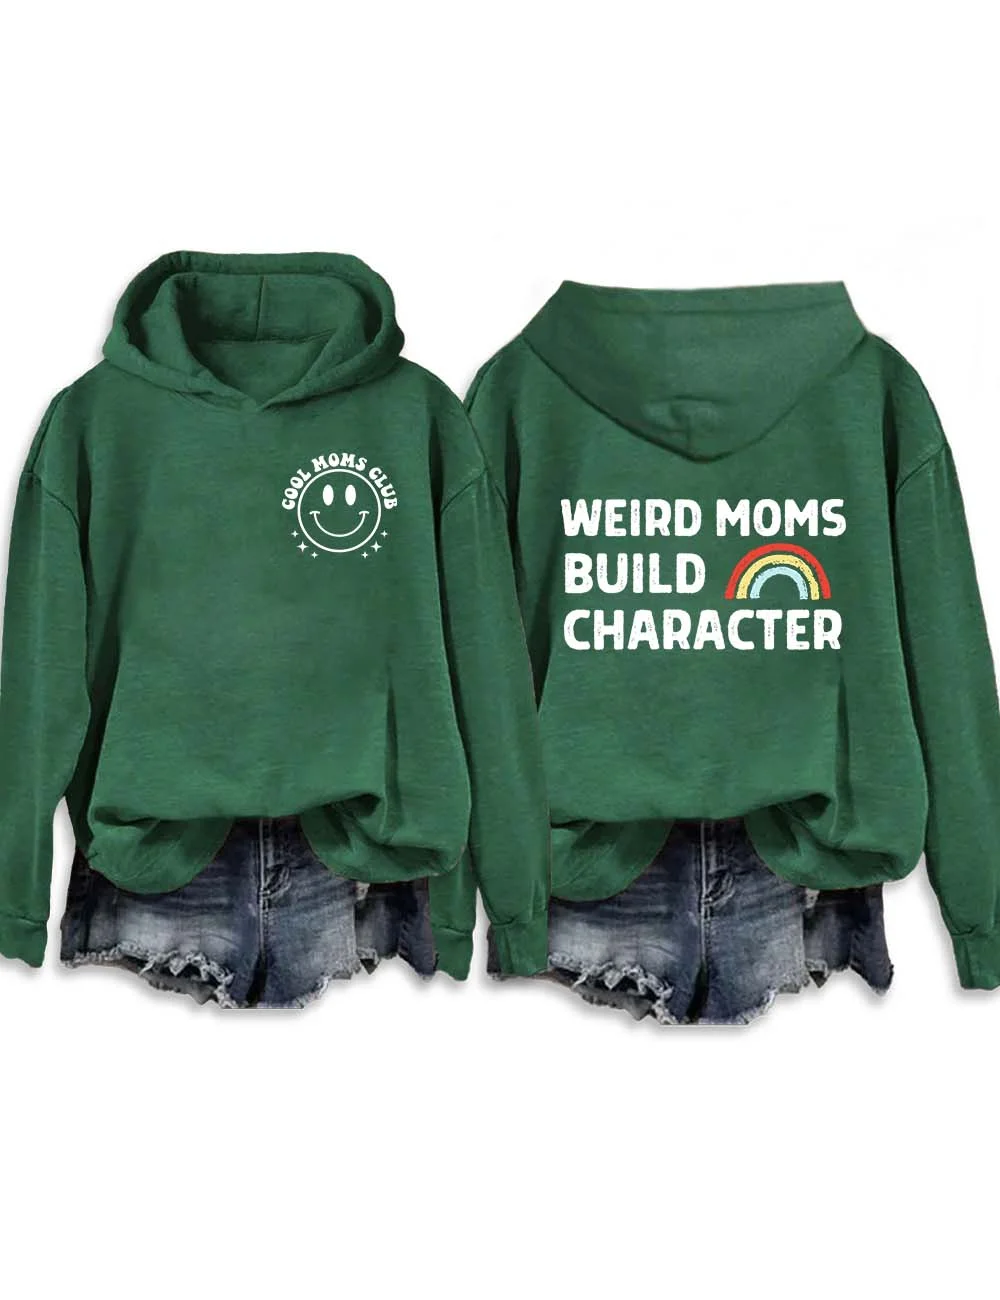 Weird Moms Build Character Hoodie